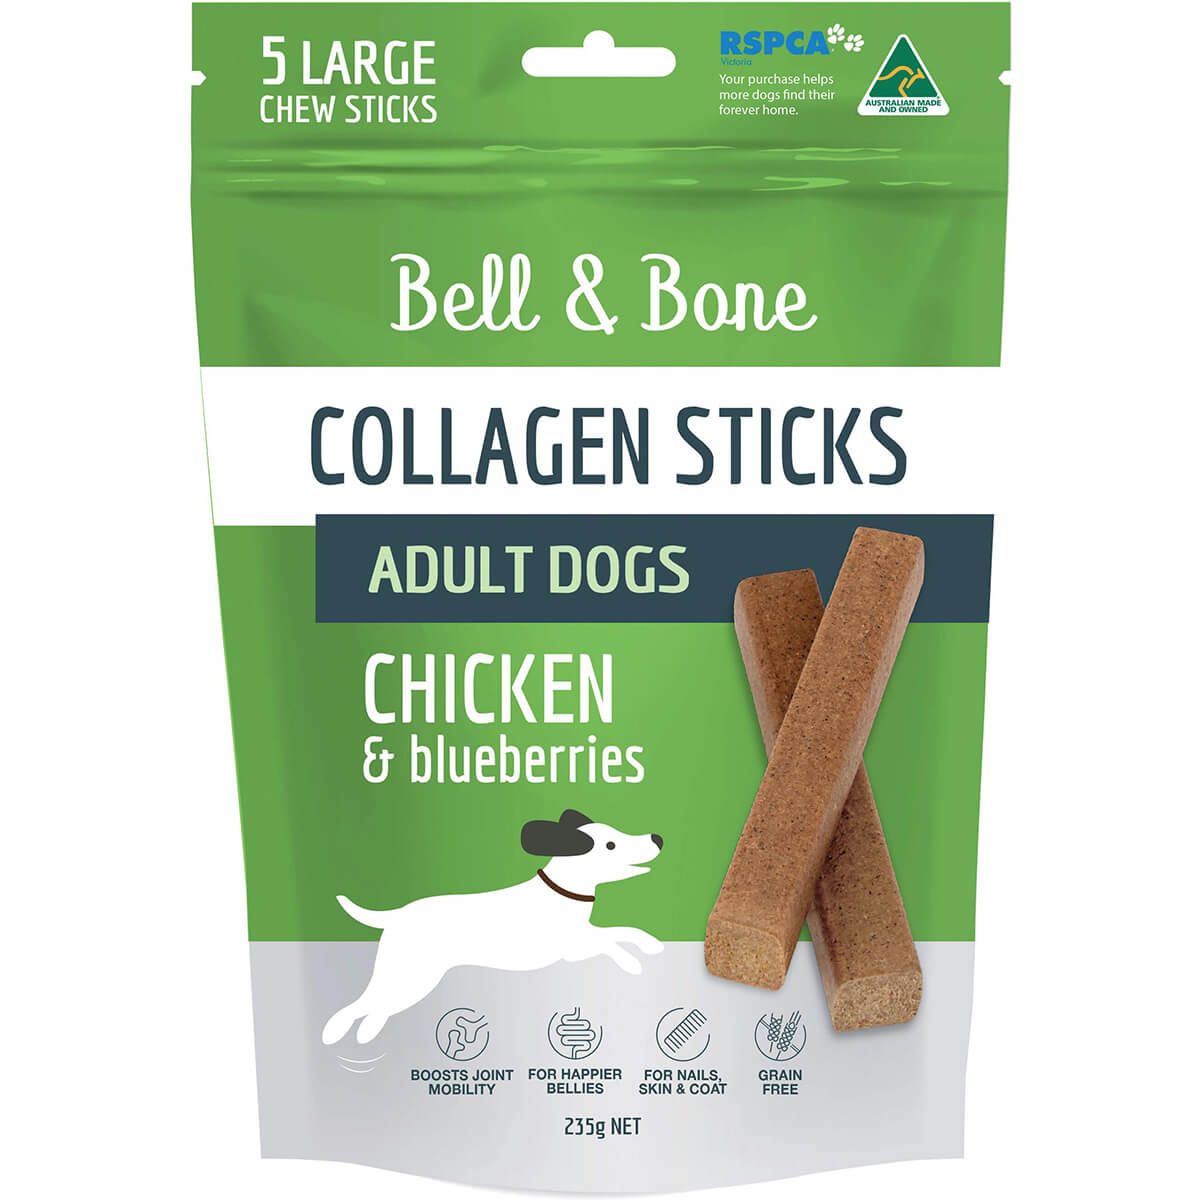 Bell & Bone Chicken Collagen Sticks Adult Dogs Treats 235g